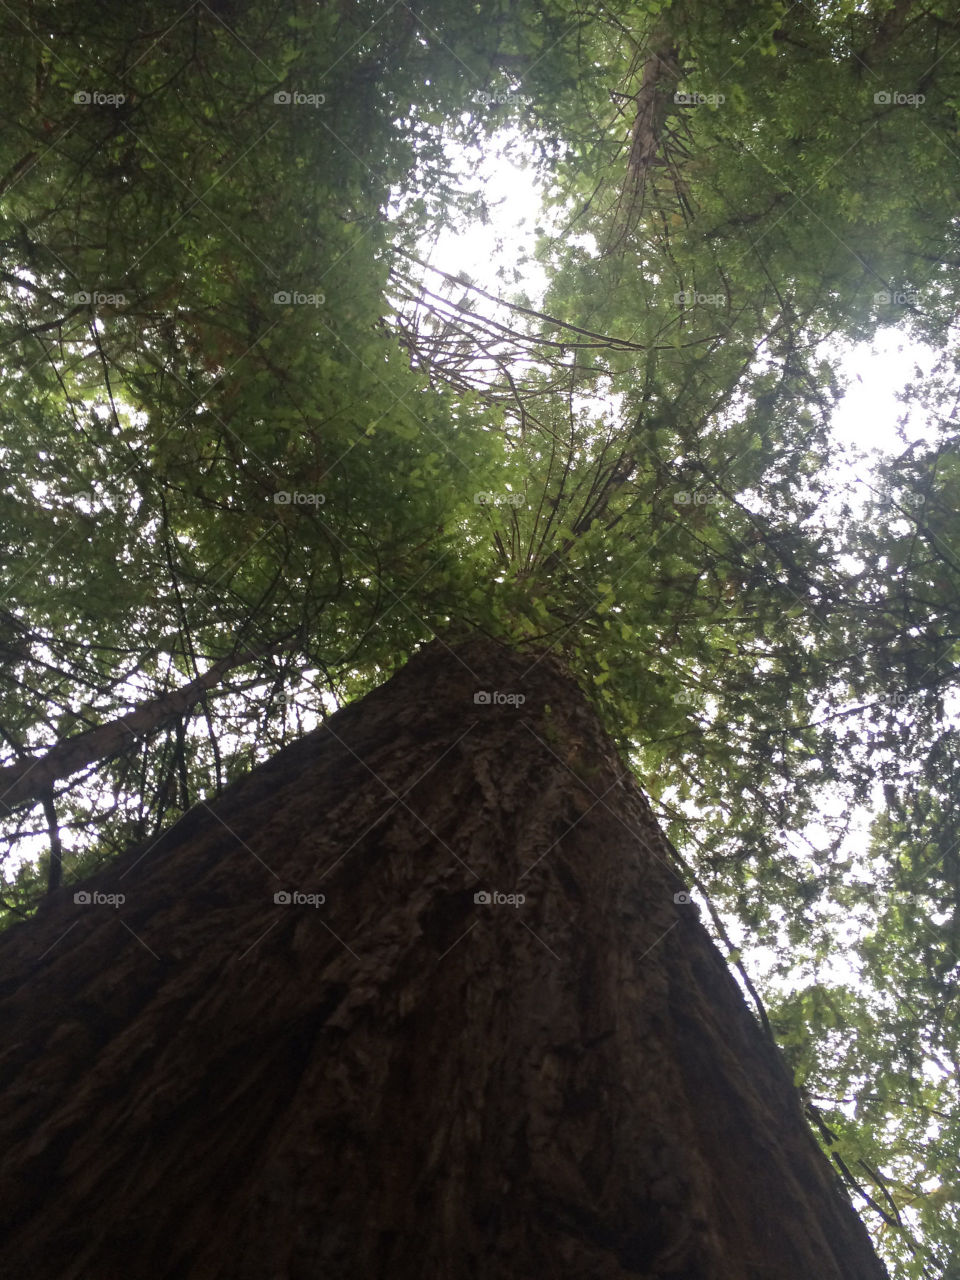 Coastal Redwoods